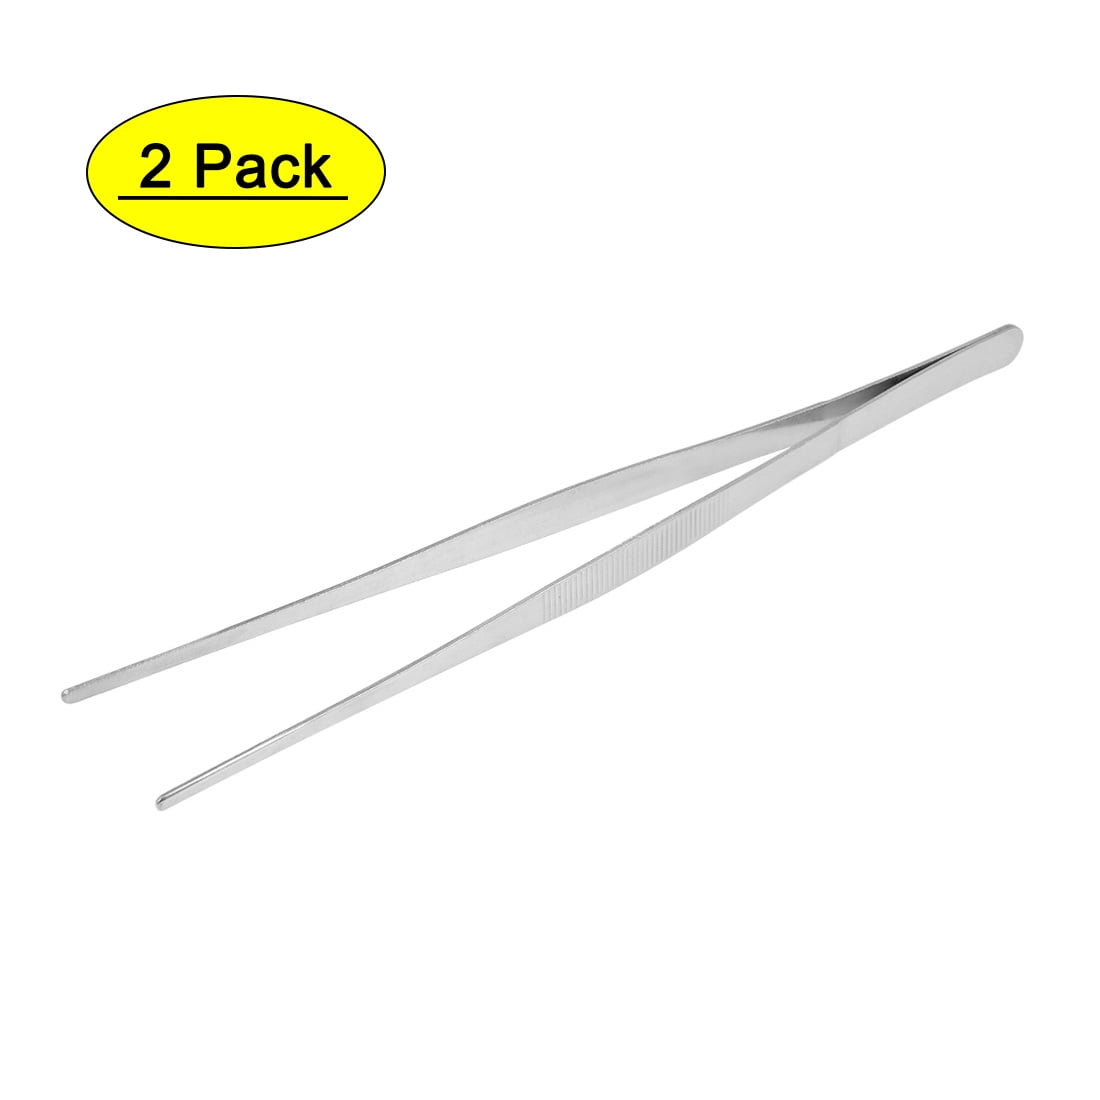 2-PCs of Handy 12 Extra-Long Tweezers Instruments Forceps